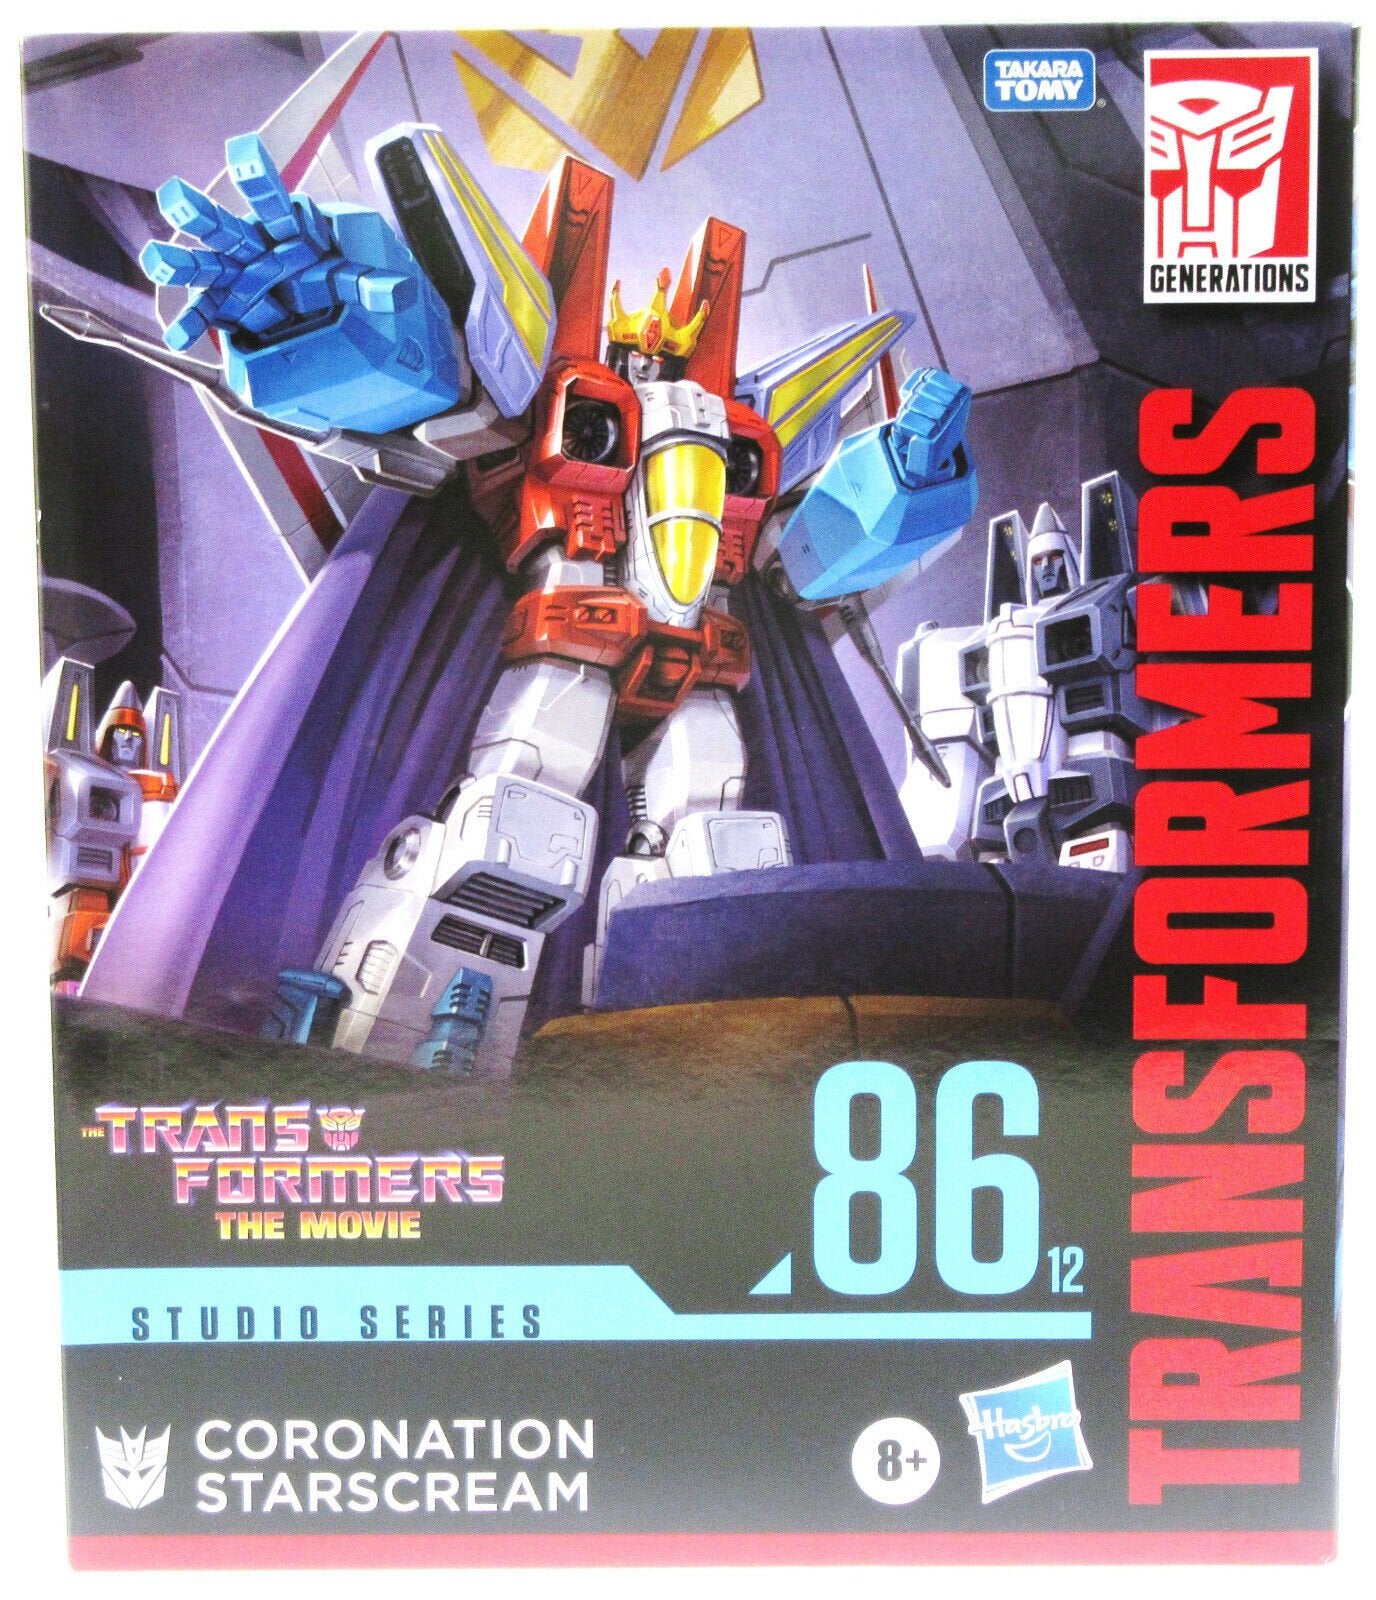 Coronation Starscream 86-12 ~ Transformers ~ Studio Series ~ Hasbro